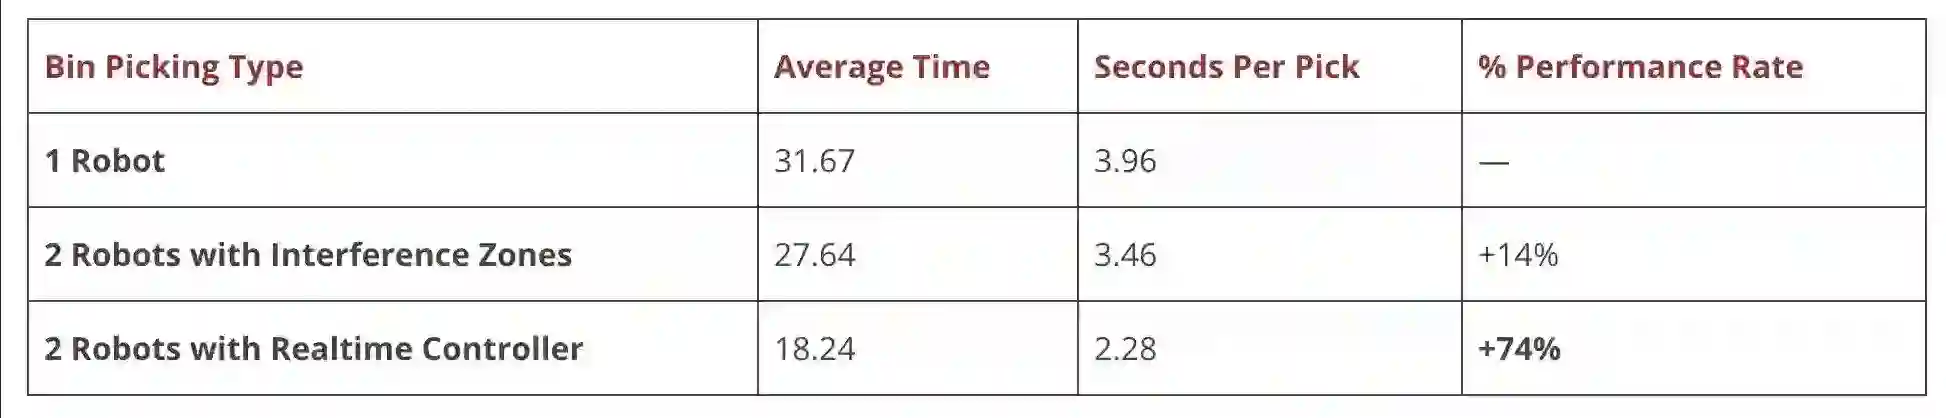 Bin Picking Performance Comparison Chart